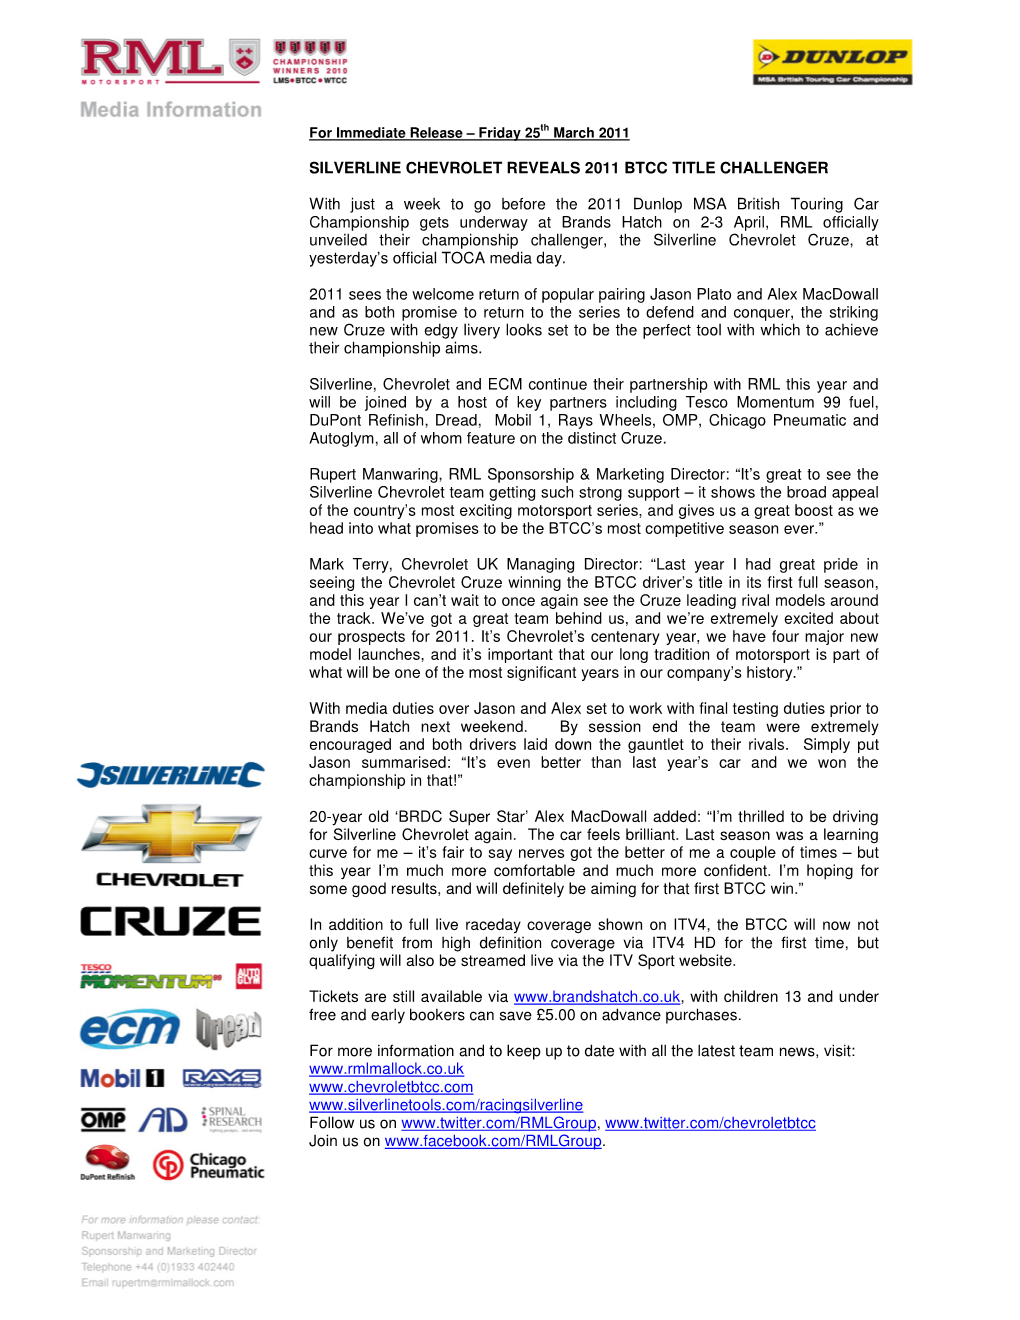 Silverline Chevrolet Reveals 2011 Btcc Title Challenger